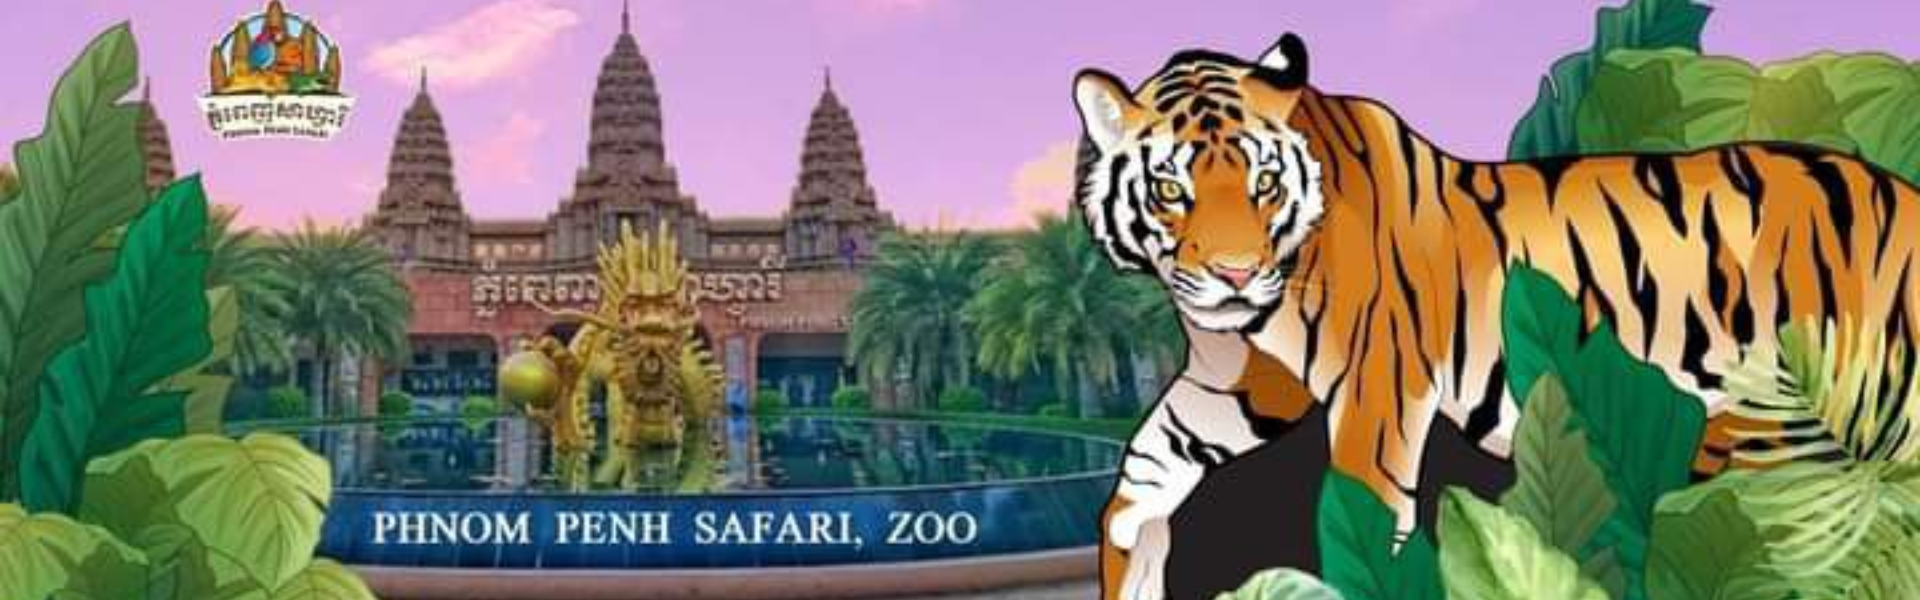 Phnom Penh Safari (Zoo)